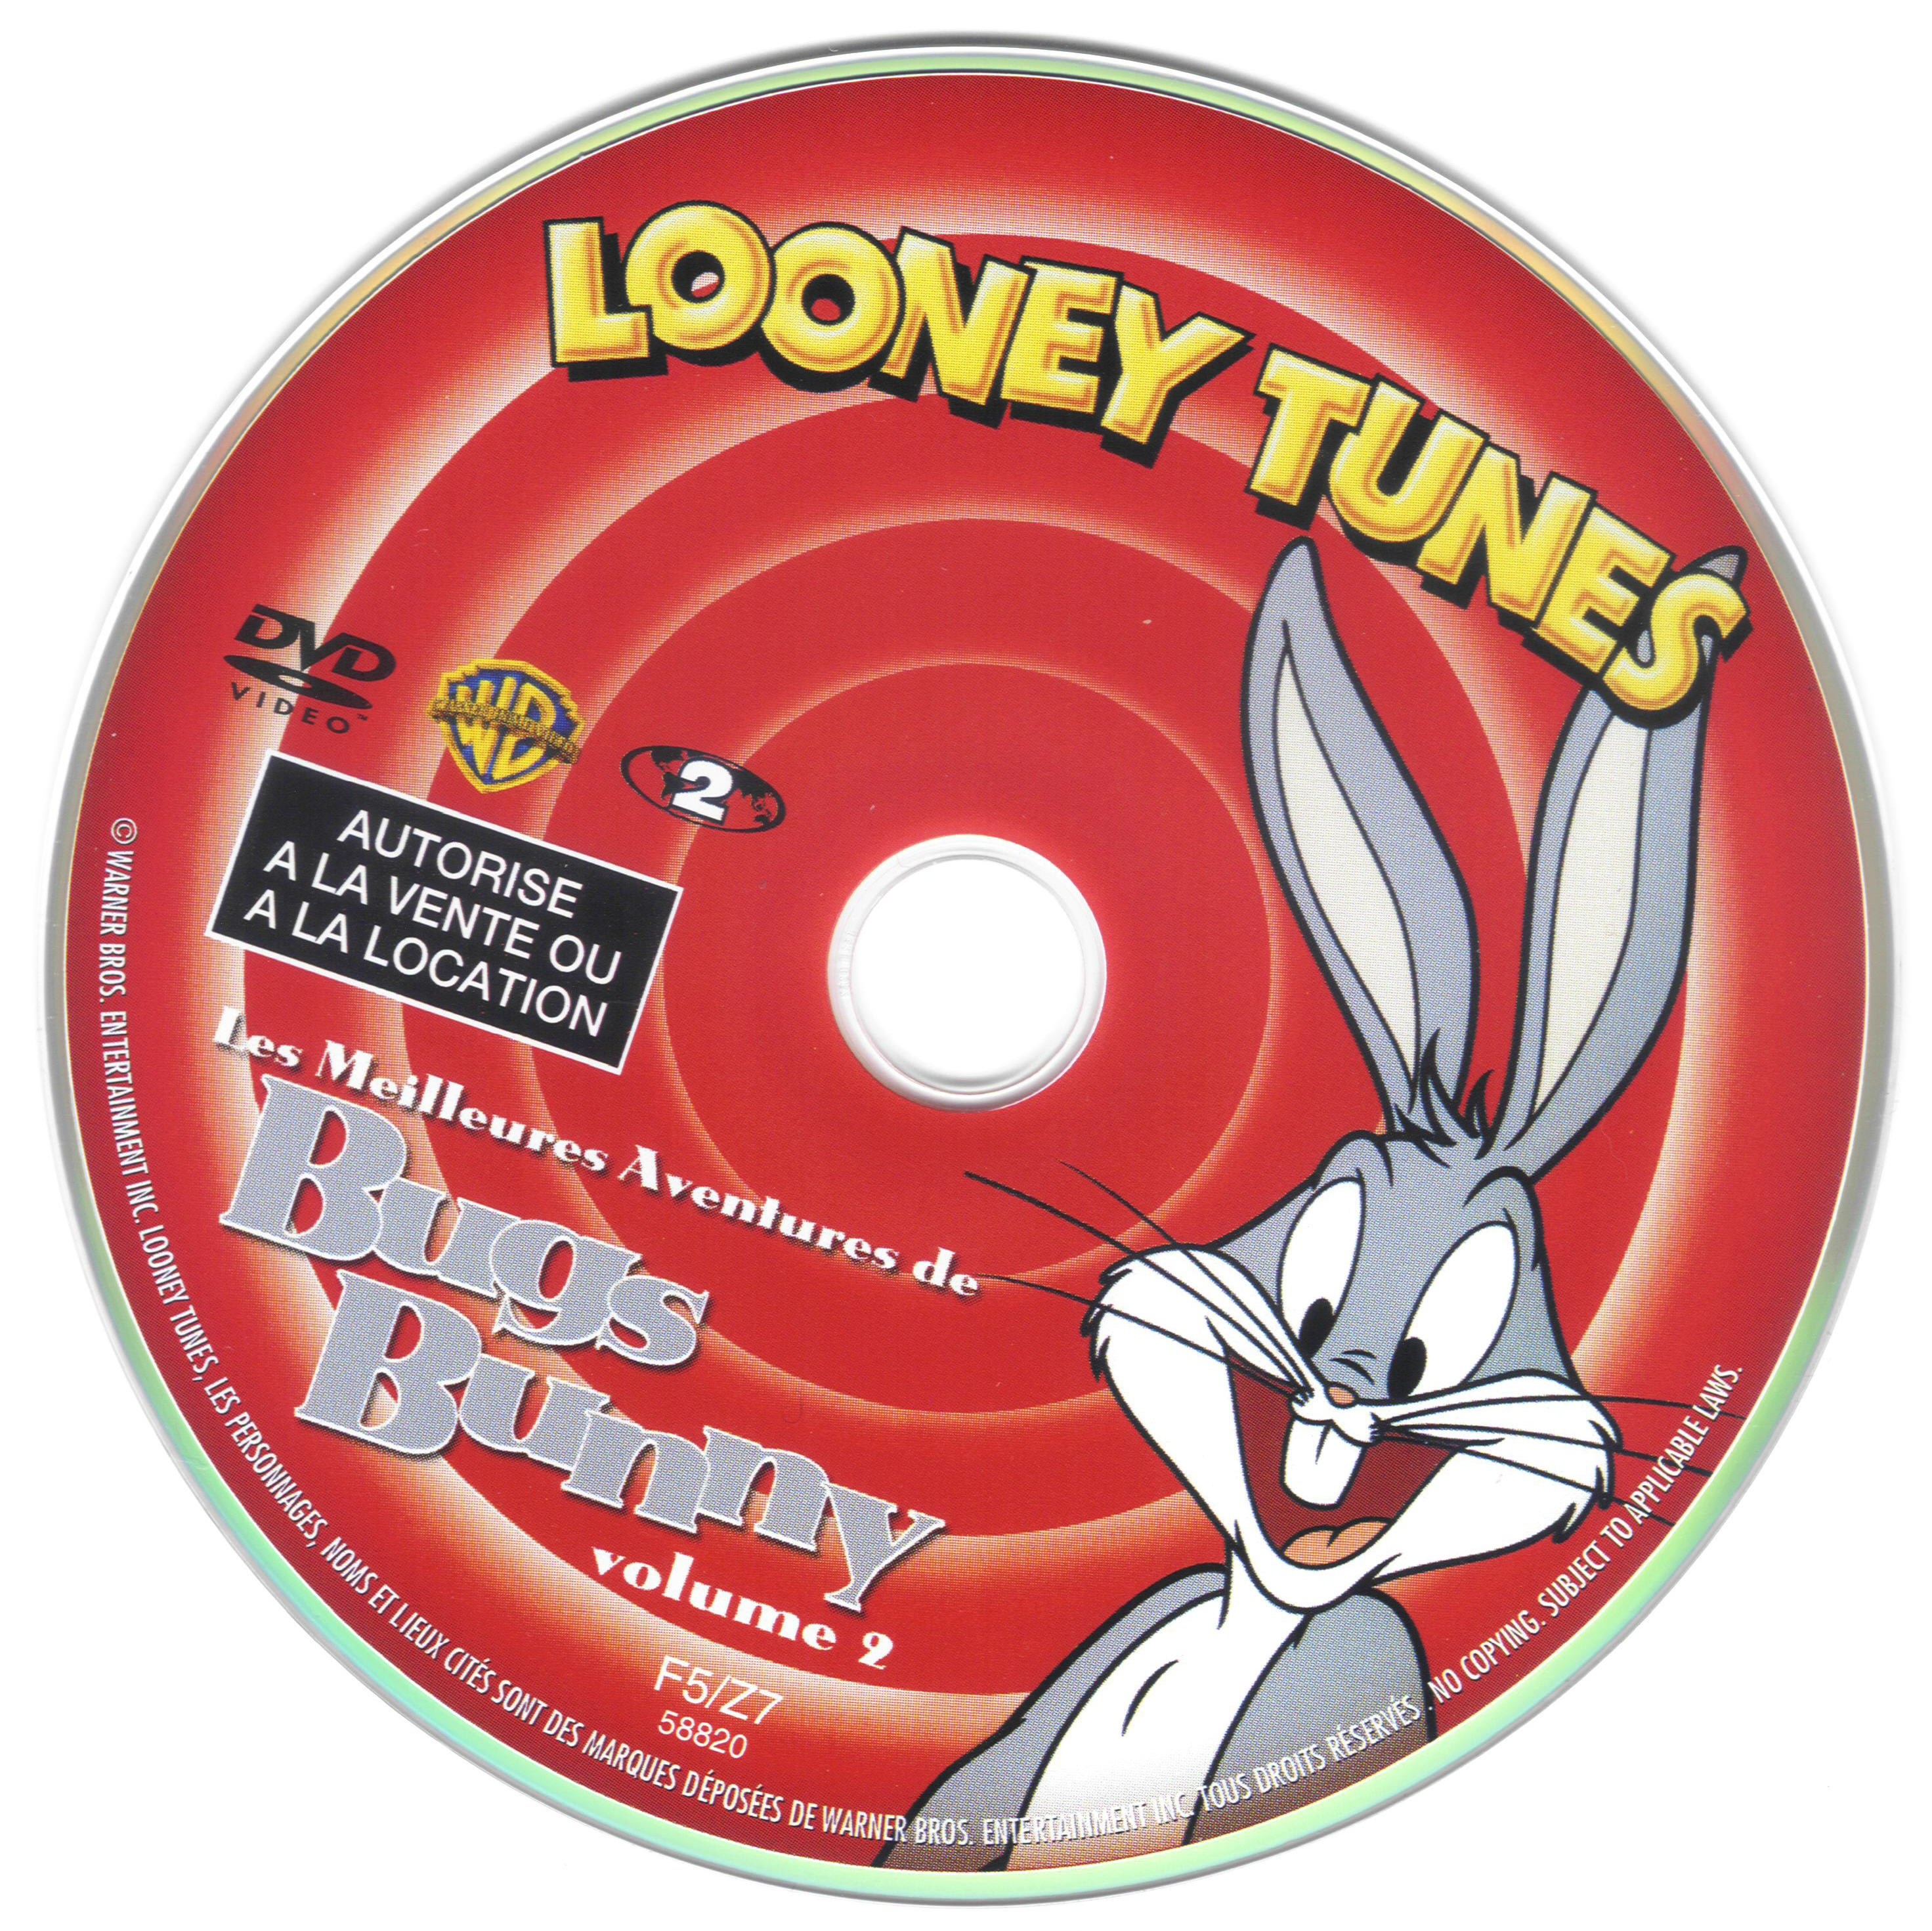 Looney tunes Les meilleures aventures de Bugs Bunny vol 2